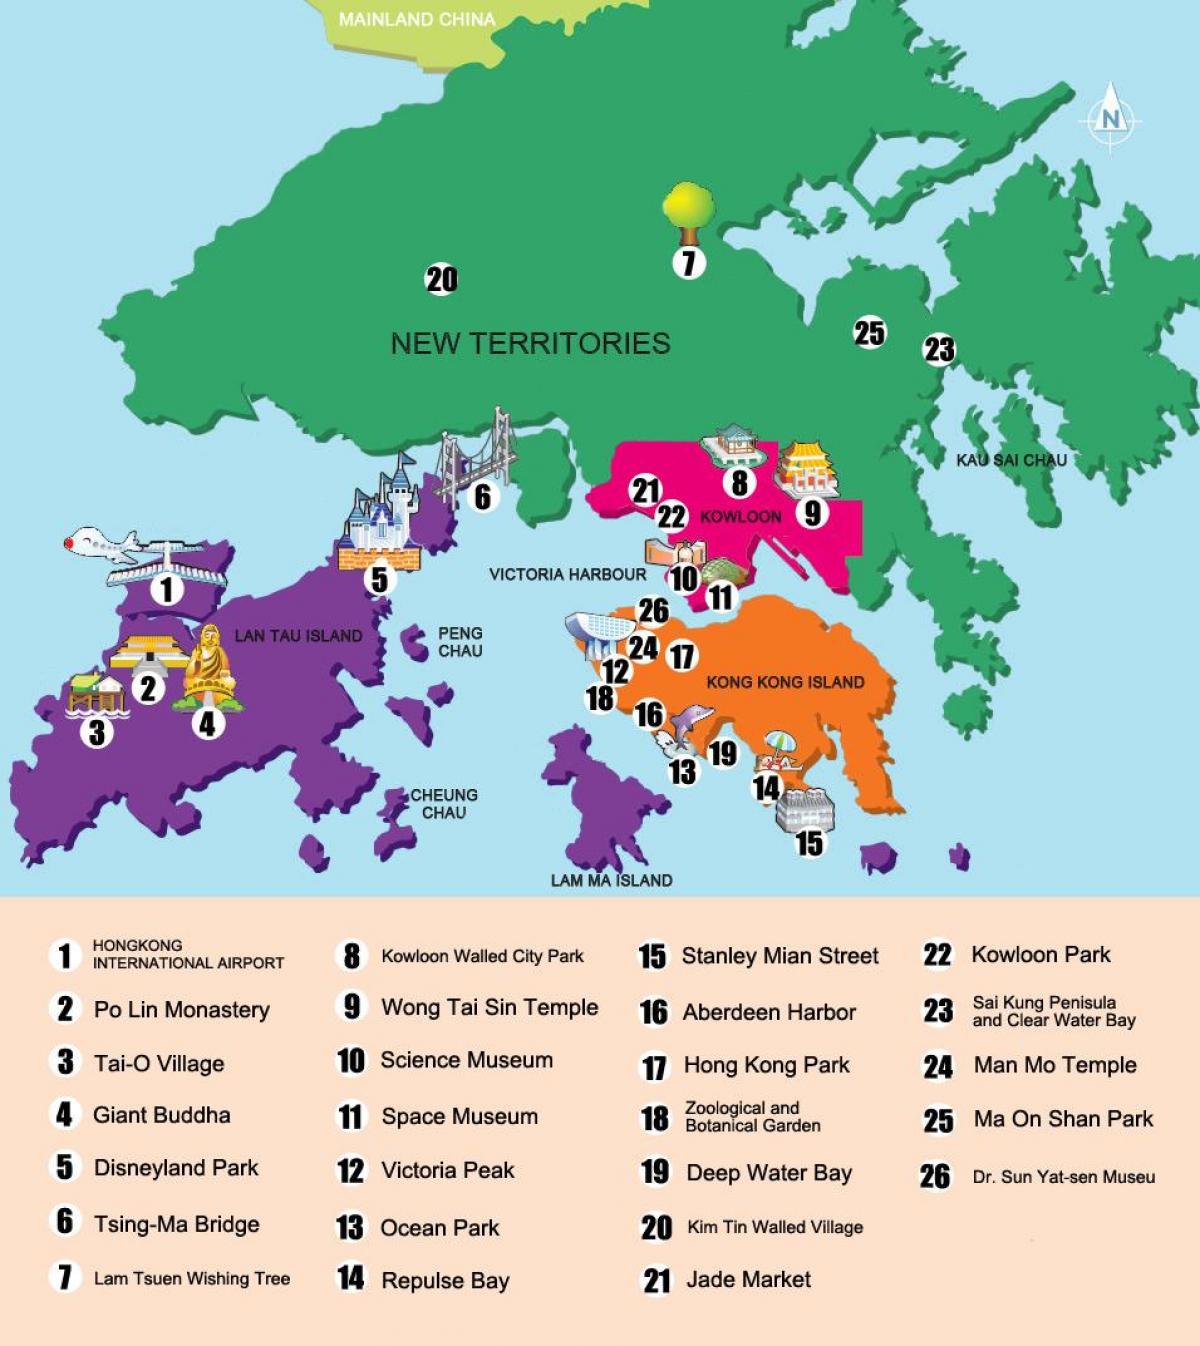 kort over nye territorier, Hong Kong